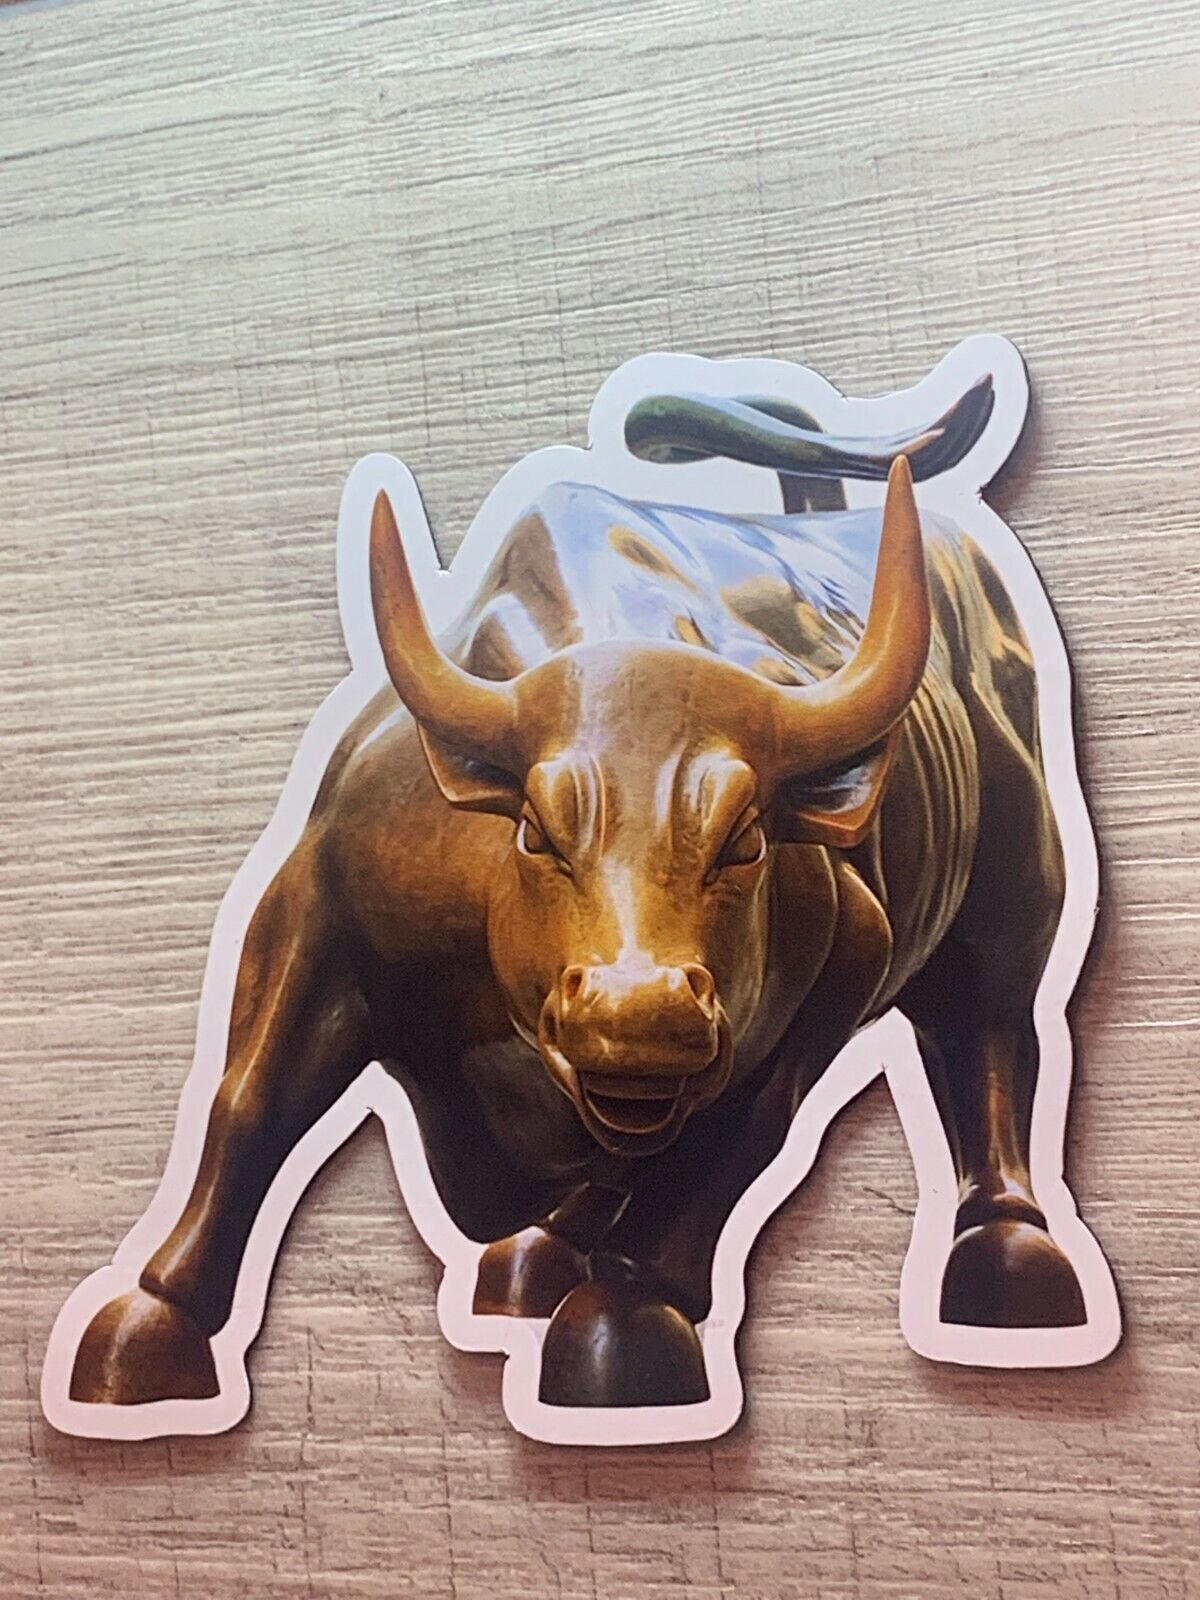 New York Wall Street Bull Refrigerator Magnet Travel Souvenir 